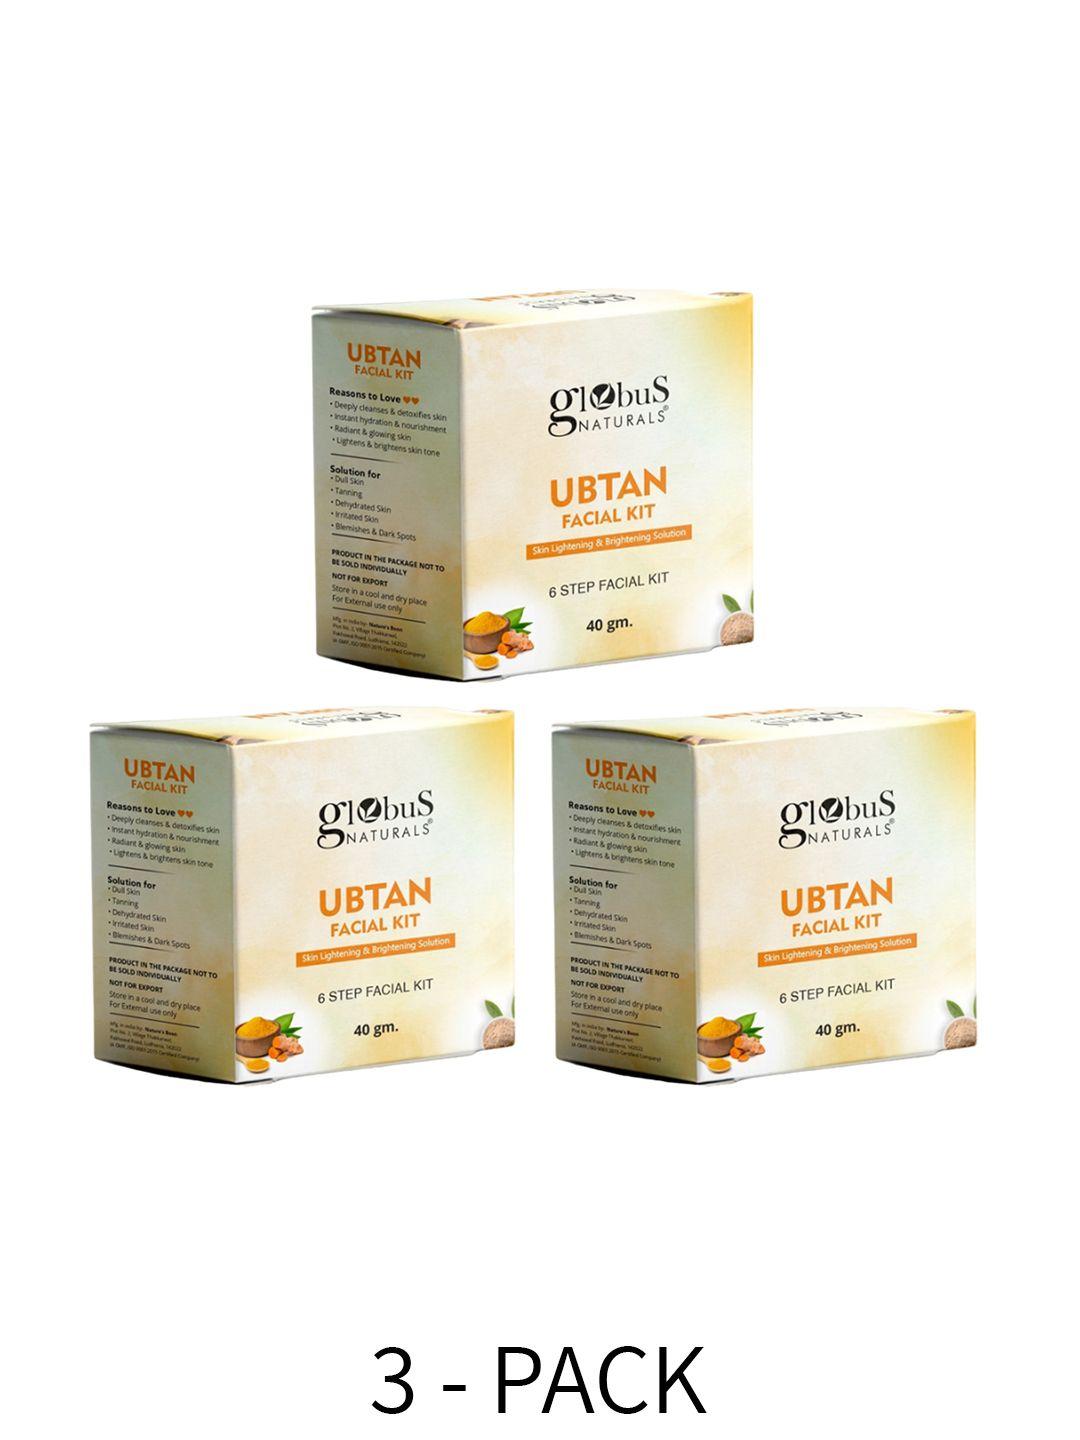 globus naturals set of 3 ubtan 6 step facial kit for radiant & glowing skin - 40g each